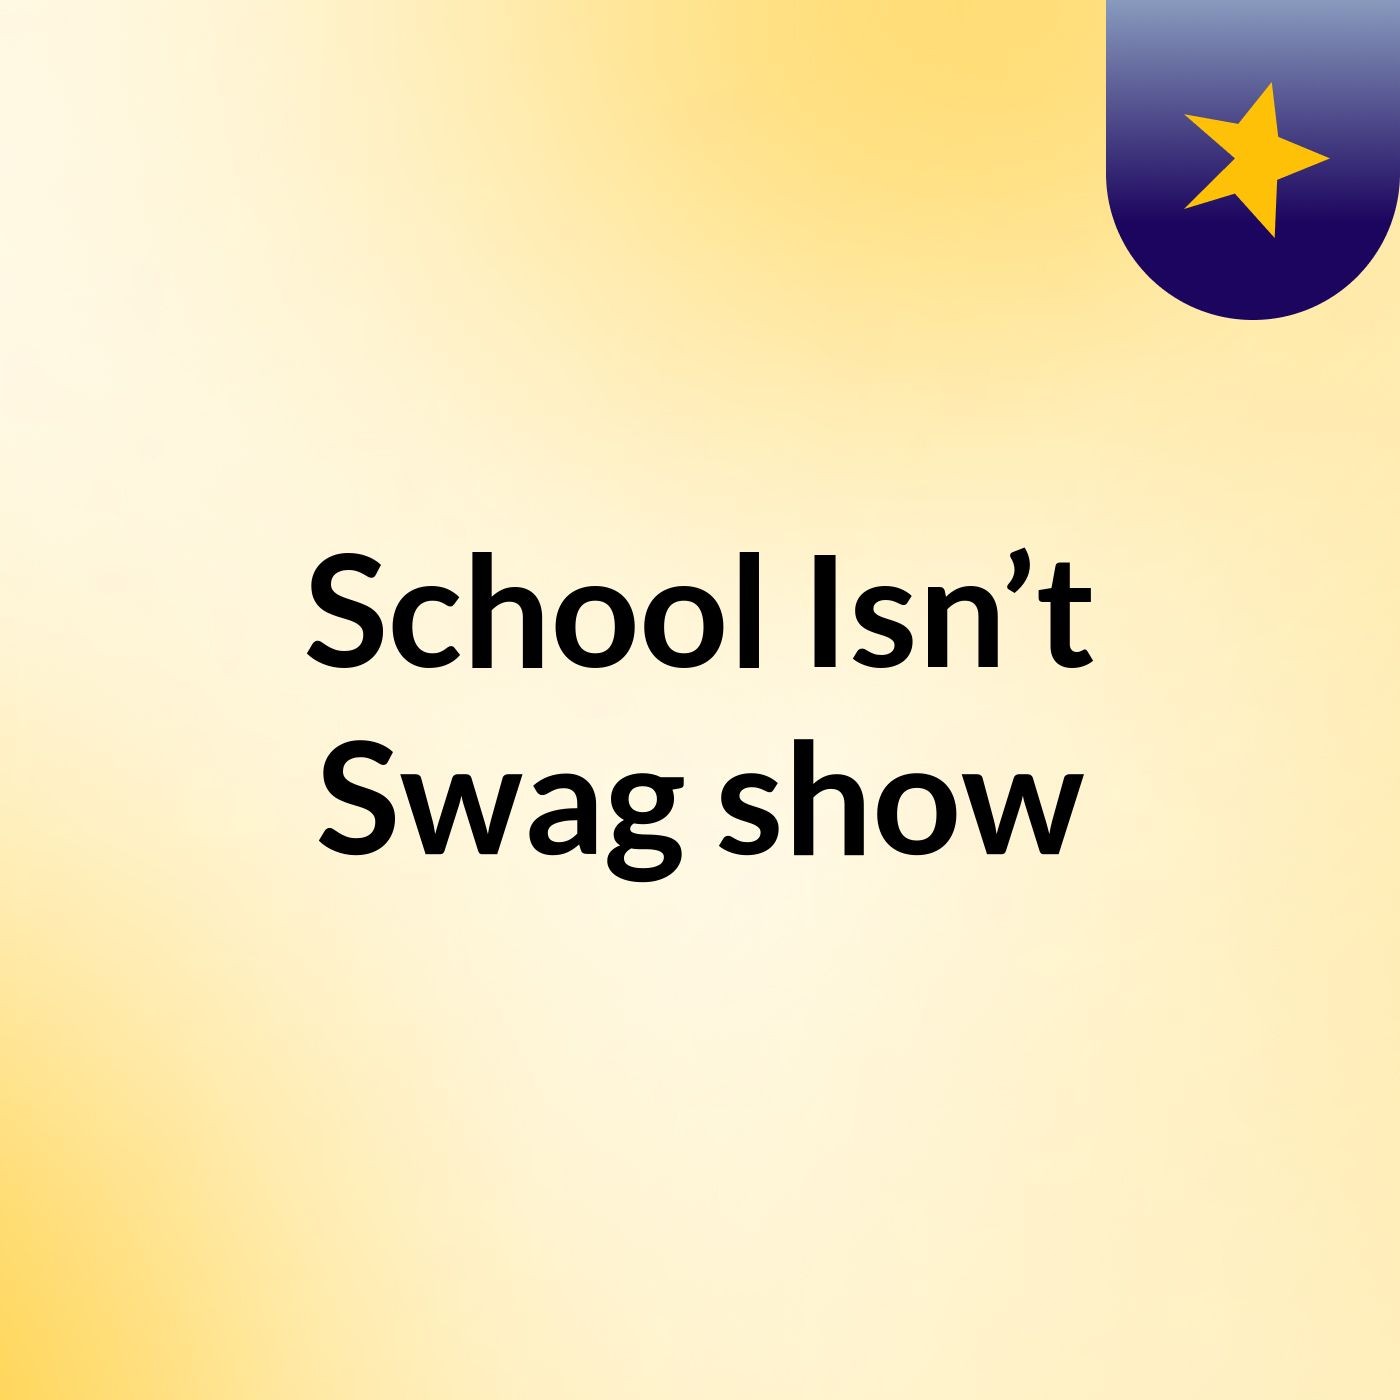 School Isn’t Swag show